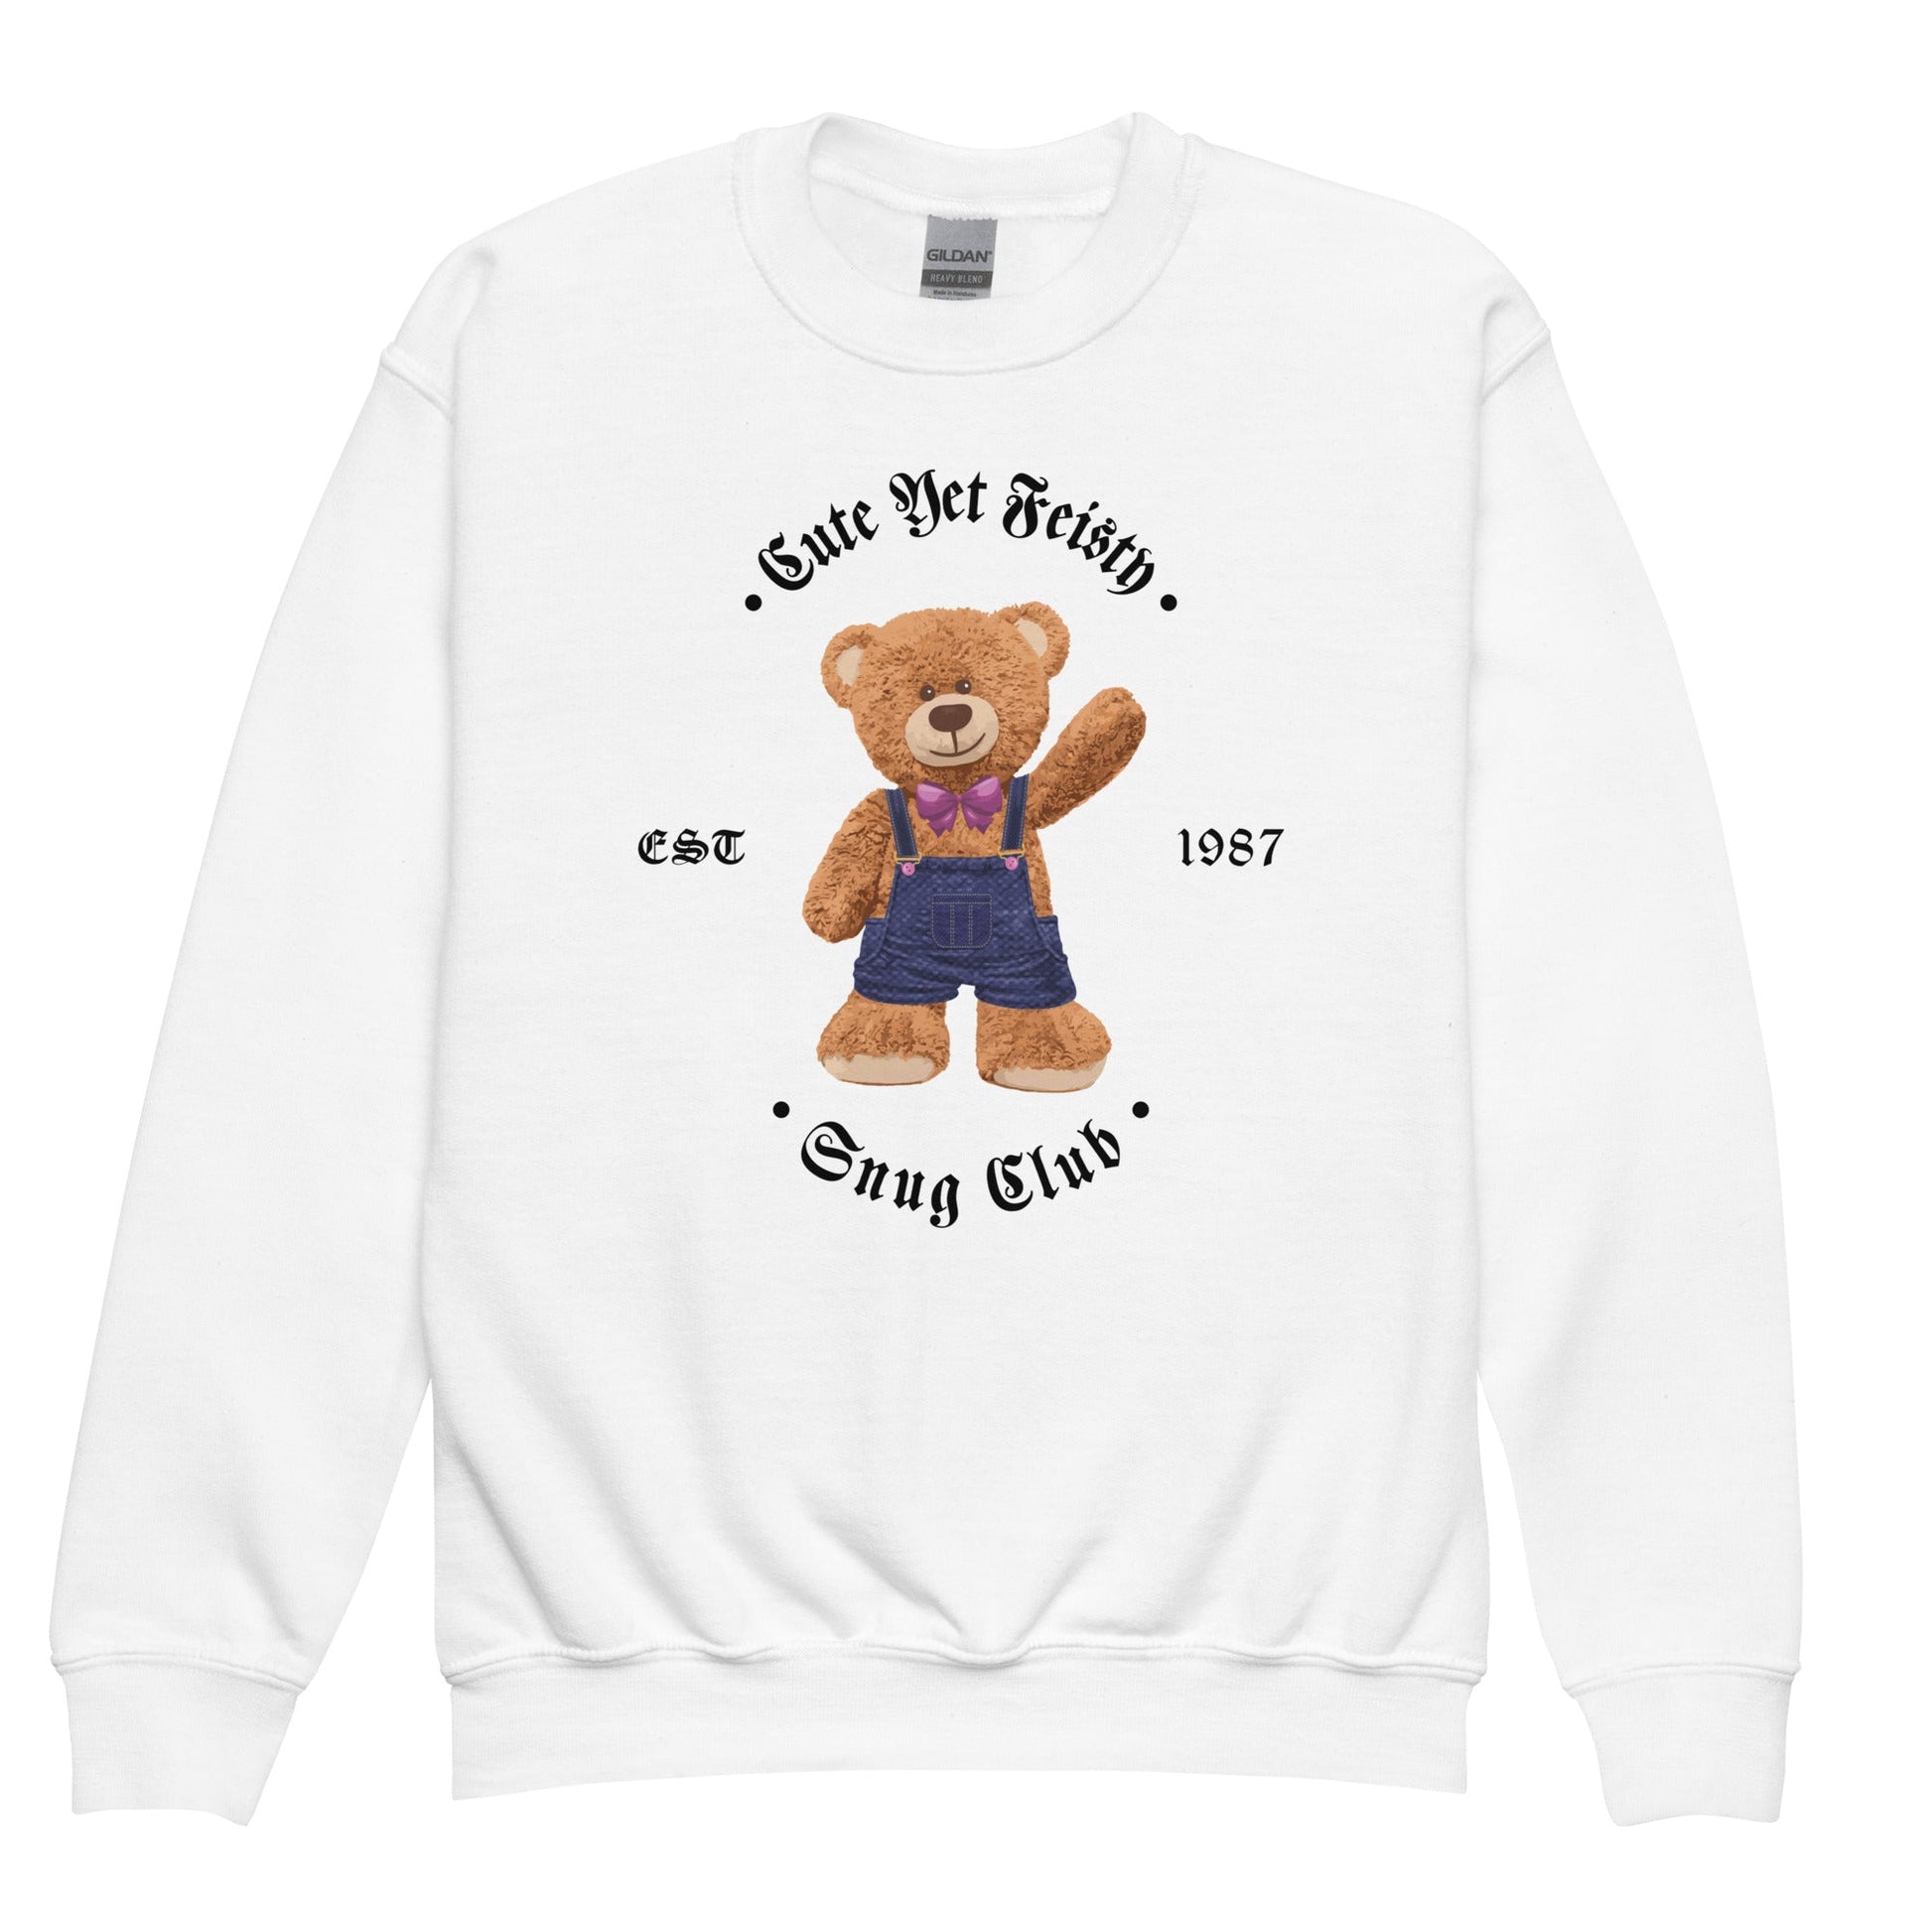 youth-crew-neck-sweatshirt-cute-teddy-bear-white